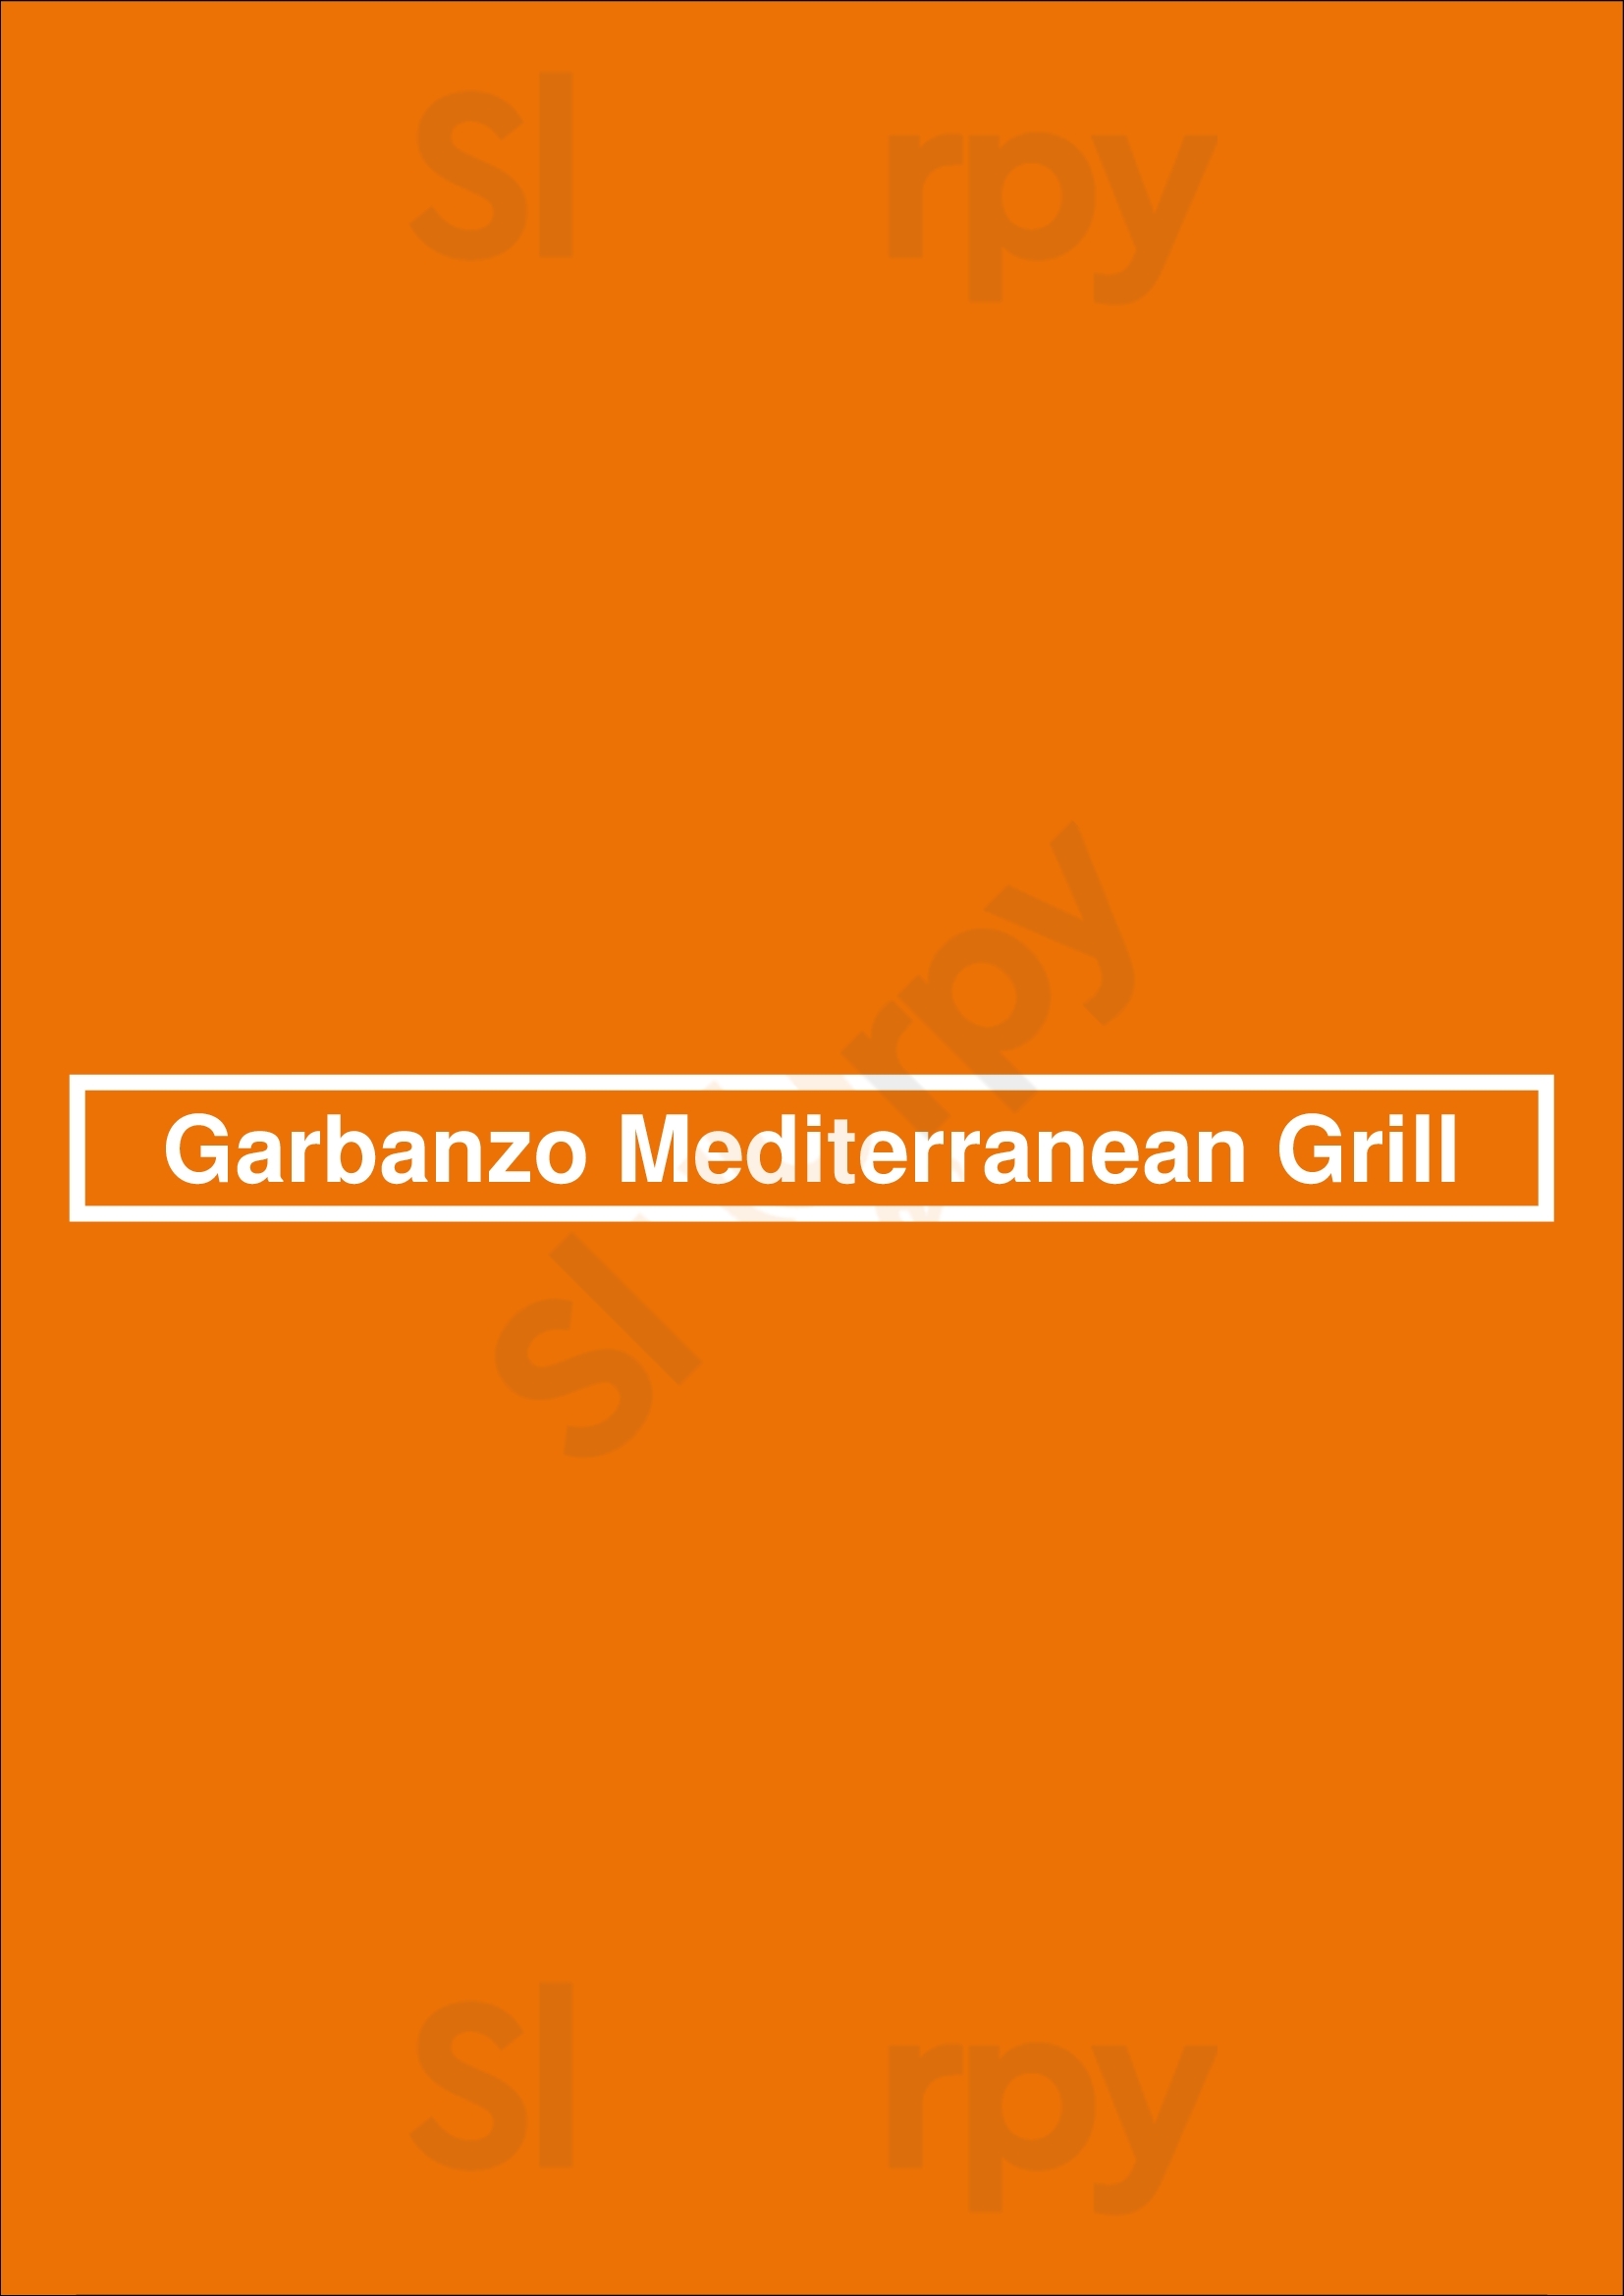 Garbanzo Mediterranean Grill Denver Menu - 1